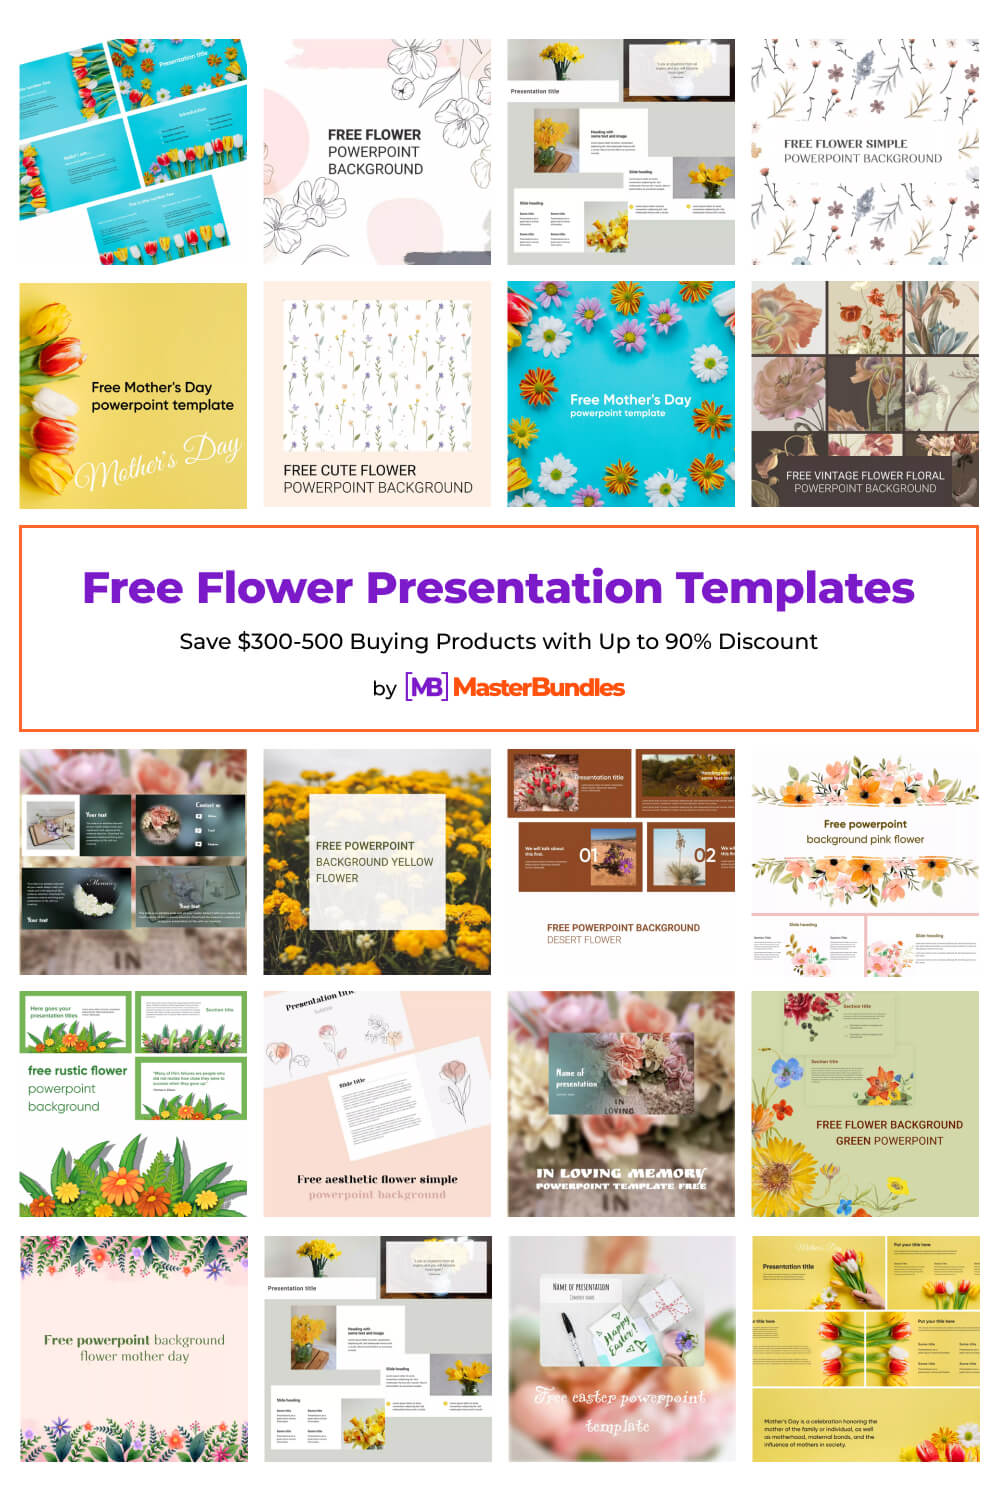 free flower presentation templates pinterest image.